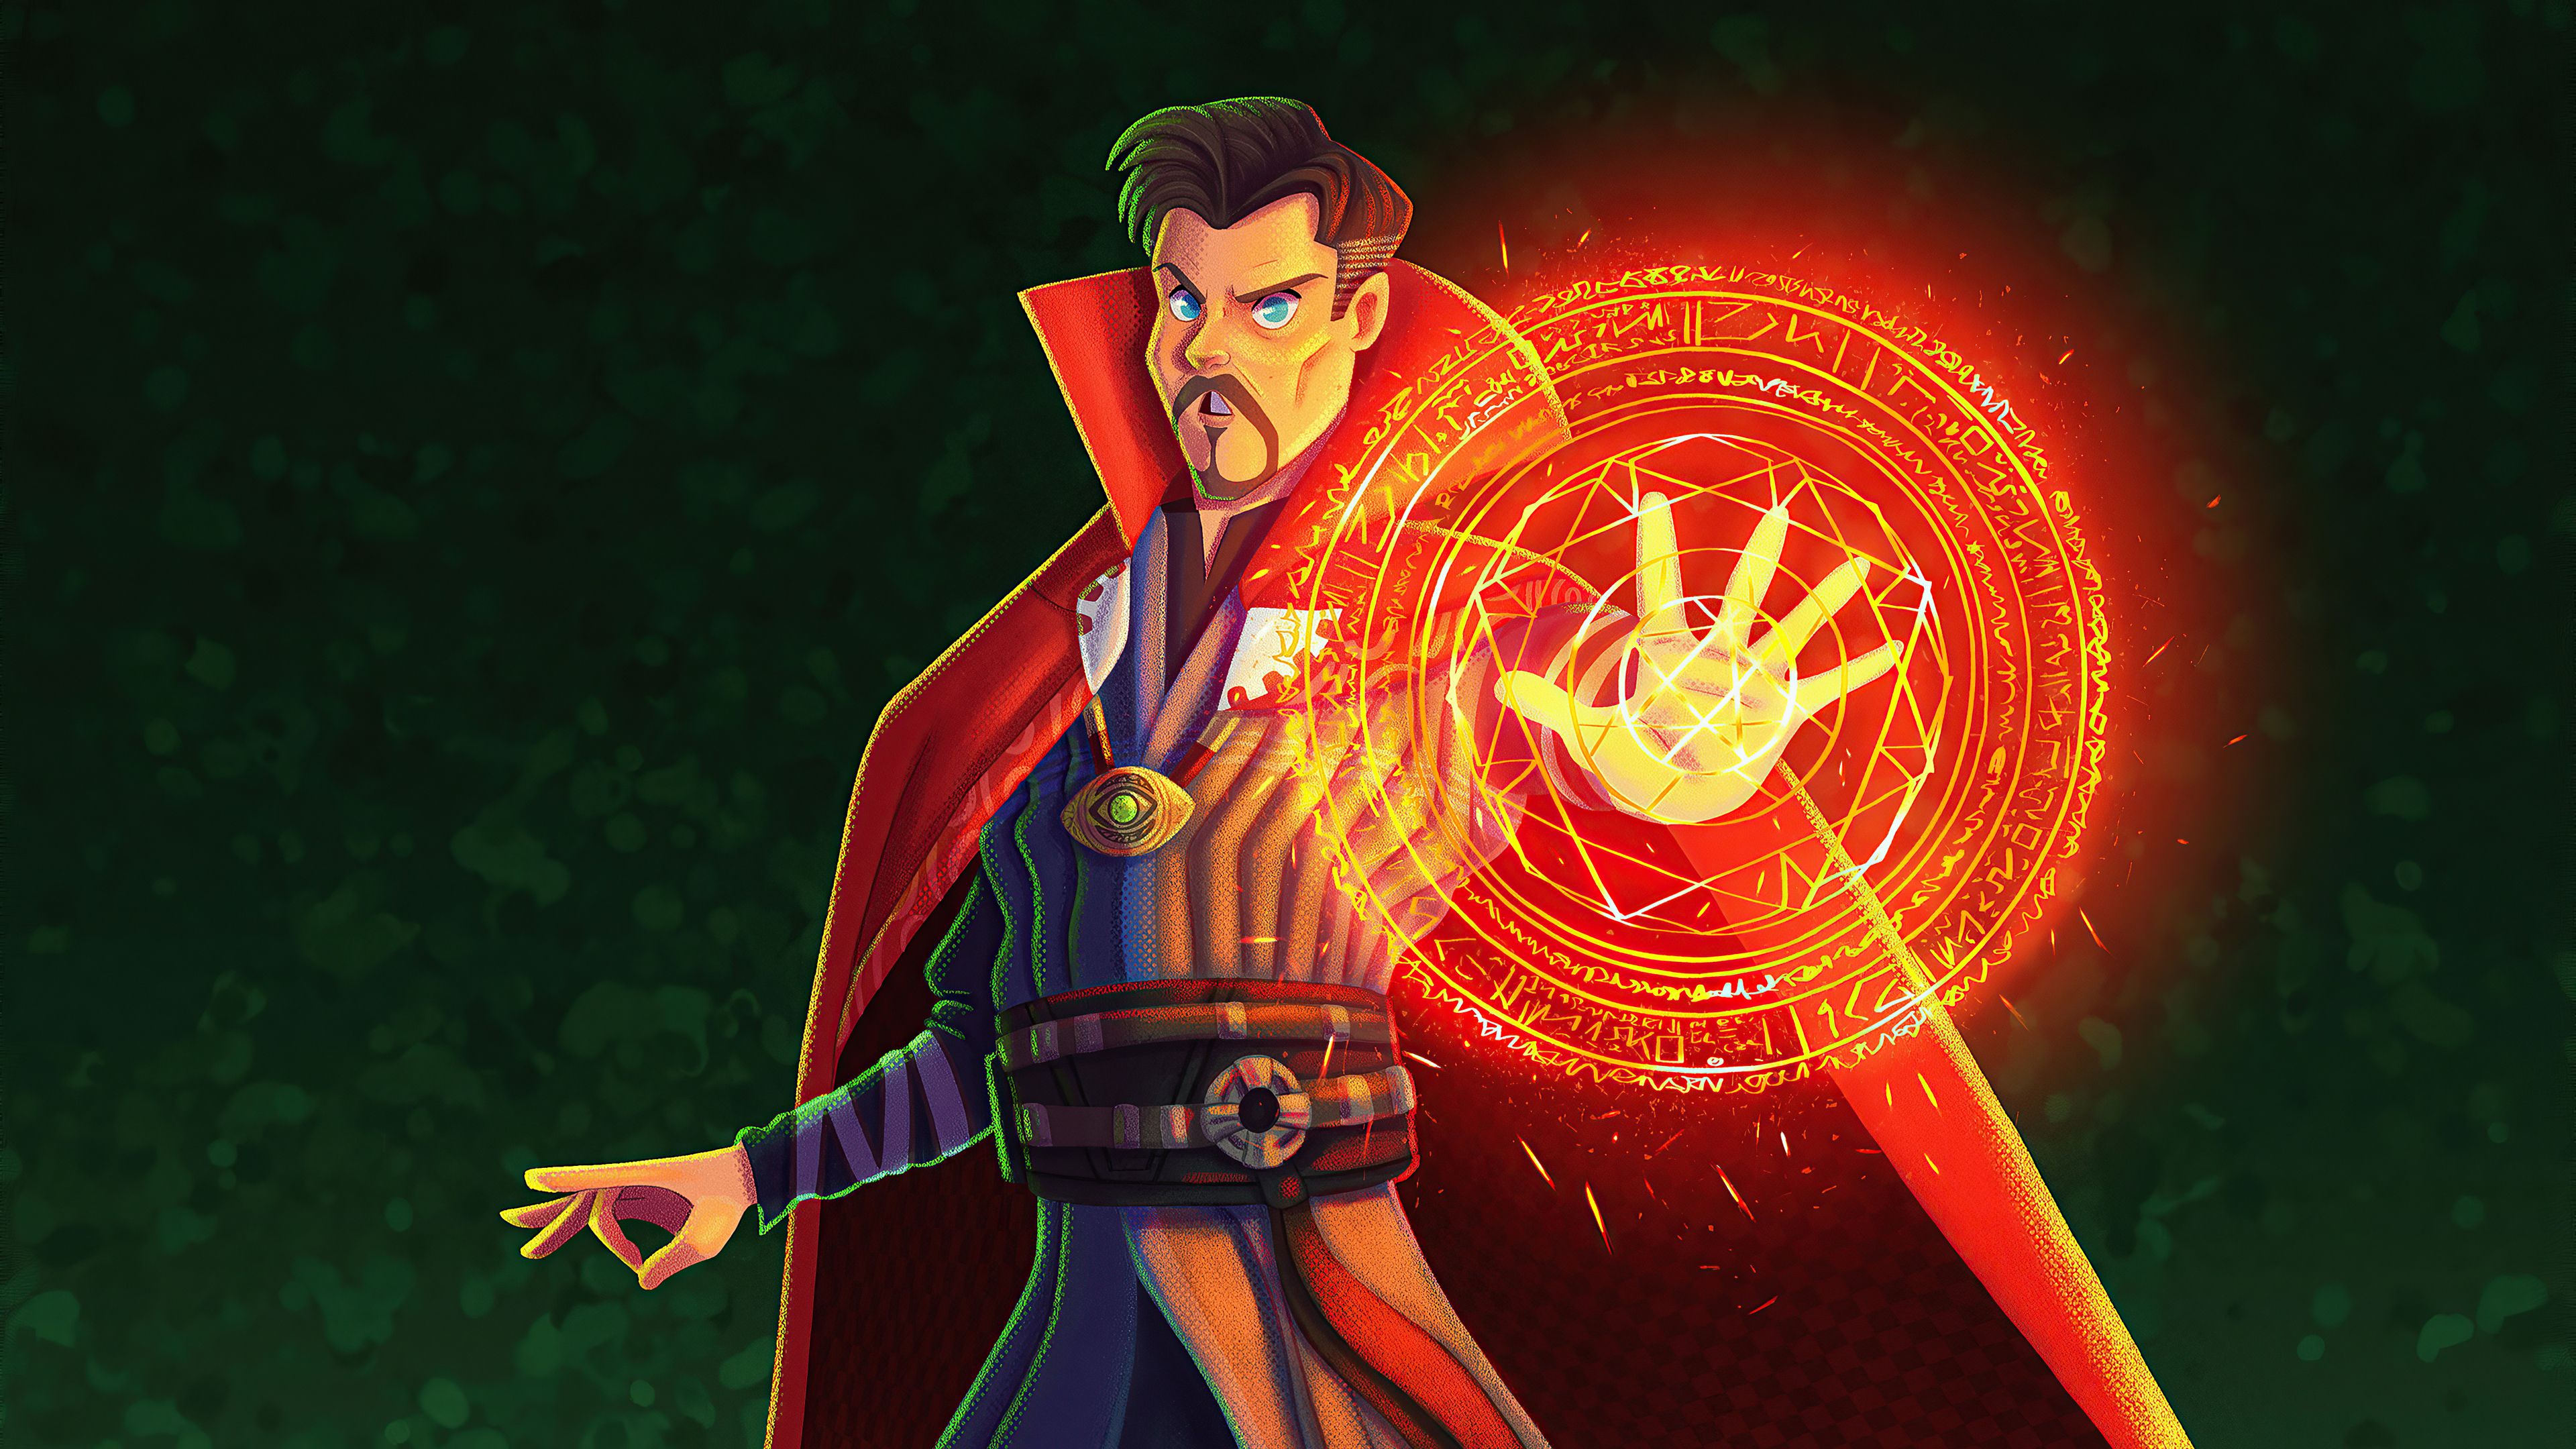 Doctor Strange Marvel Comic Art Wallpaper, HD Superheroes 4K Wallpaper, Image, Photo and Background